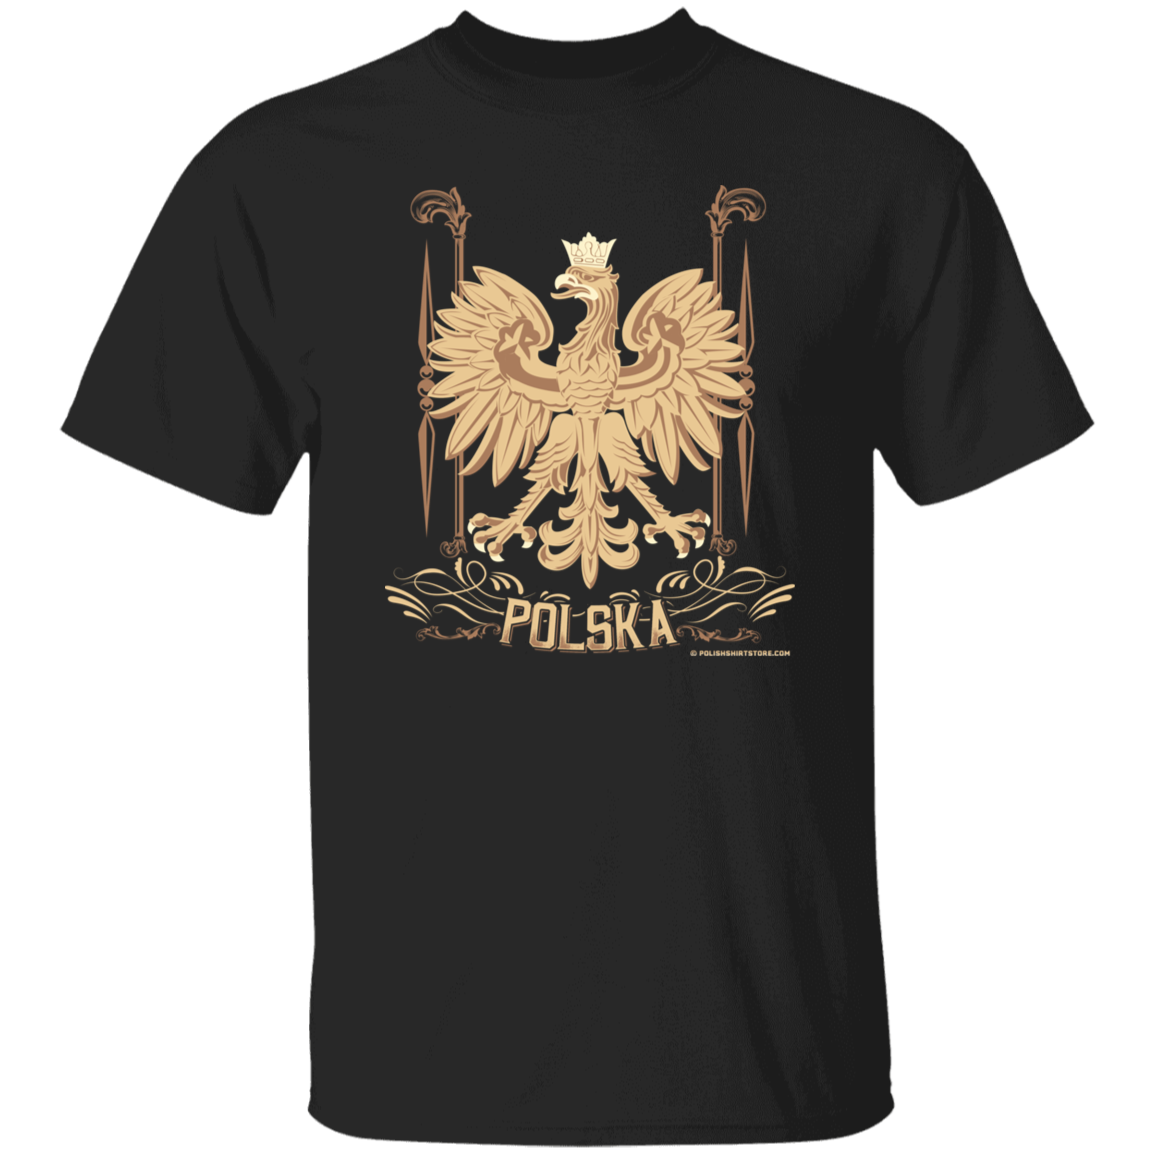 Polska Gold Polish Eagle Apparel CustomCat G500 5.3 oz. T-Shirt Black S